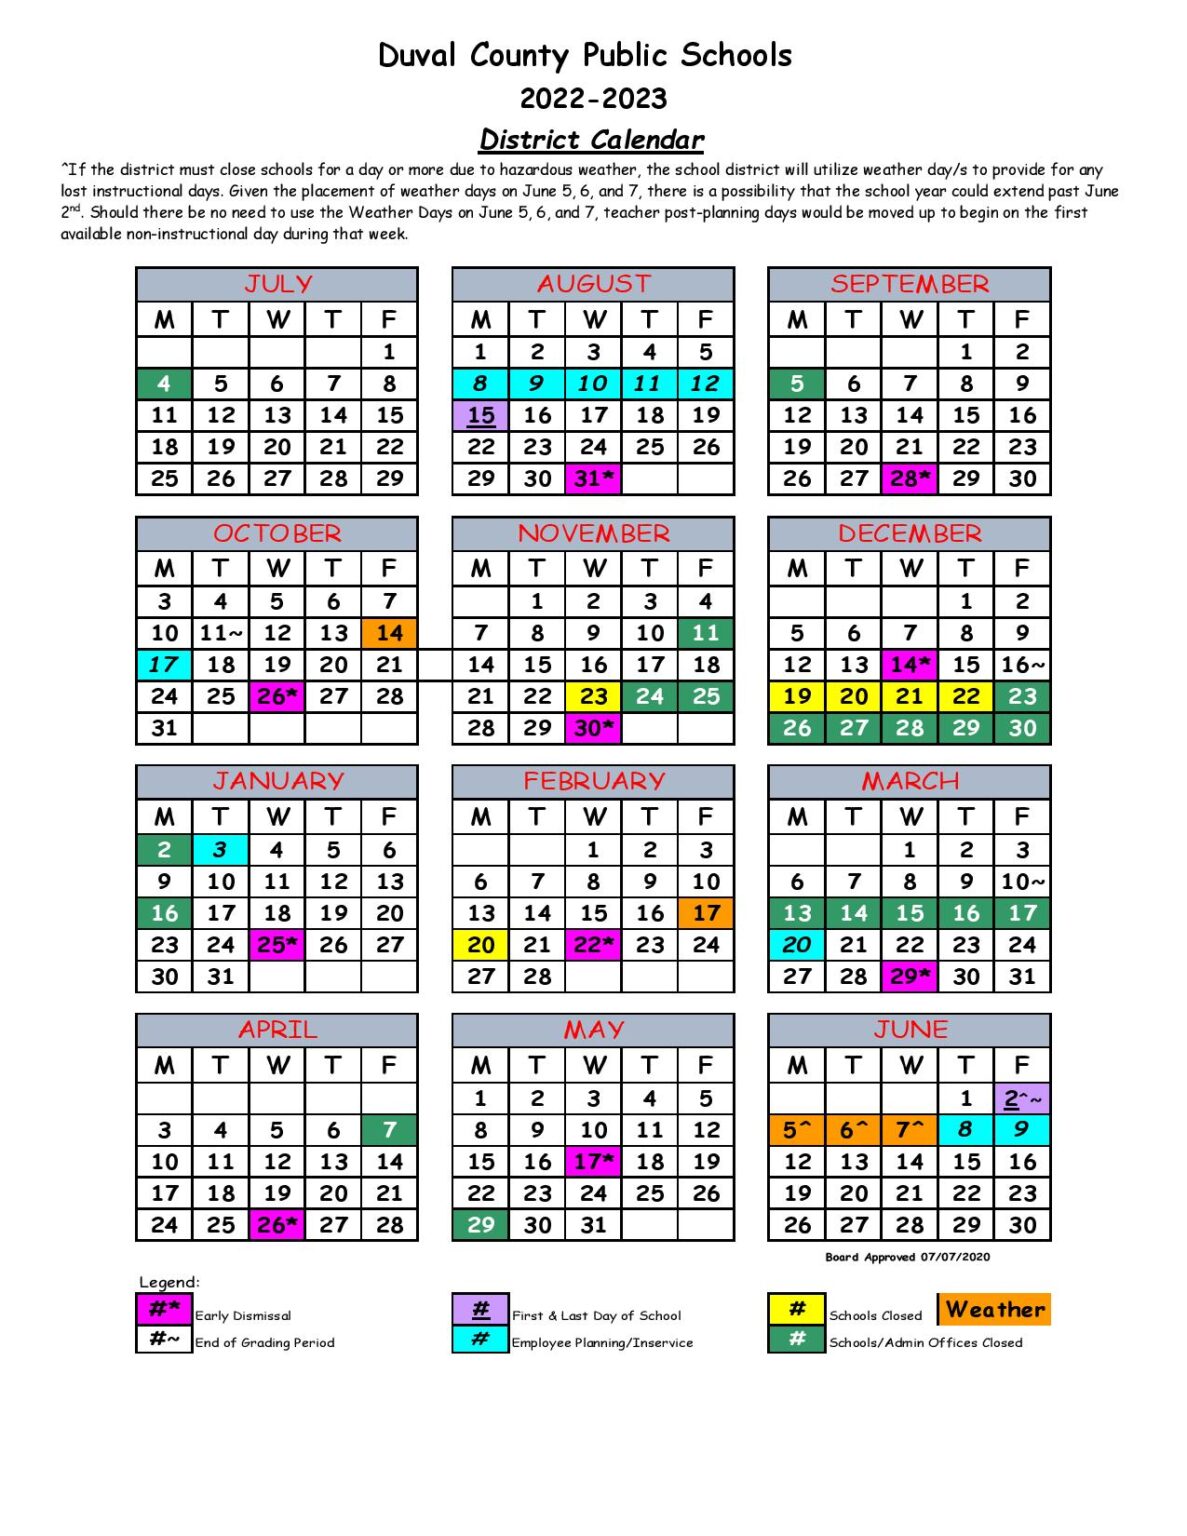 duval-county-public-schools-calendar-2022-2023-in-pdf